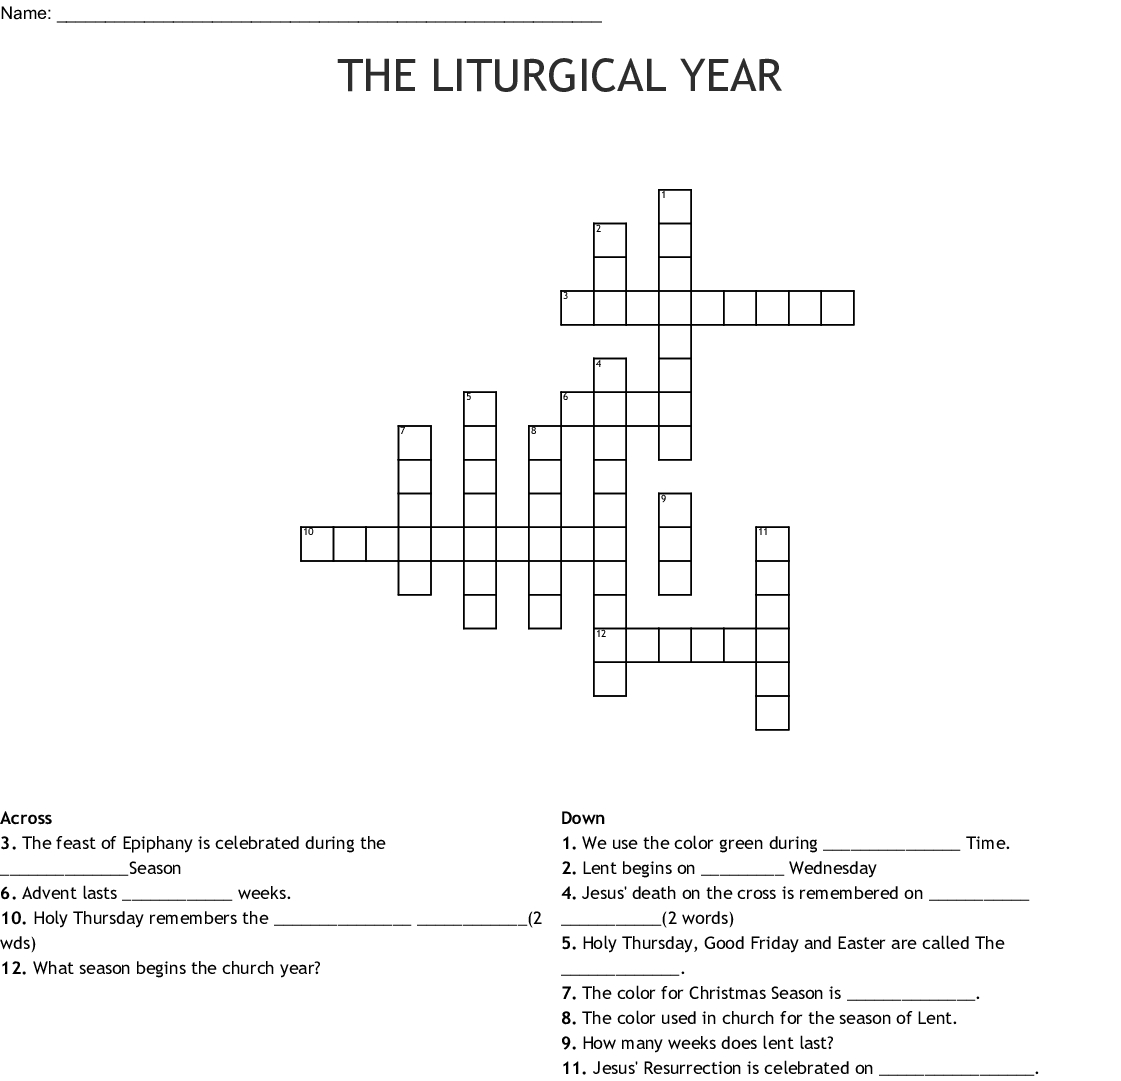 The Liturgical Year Crossword - Wordmint